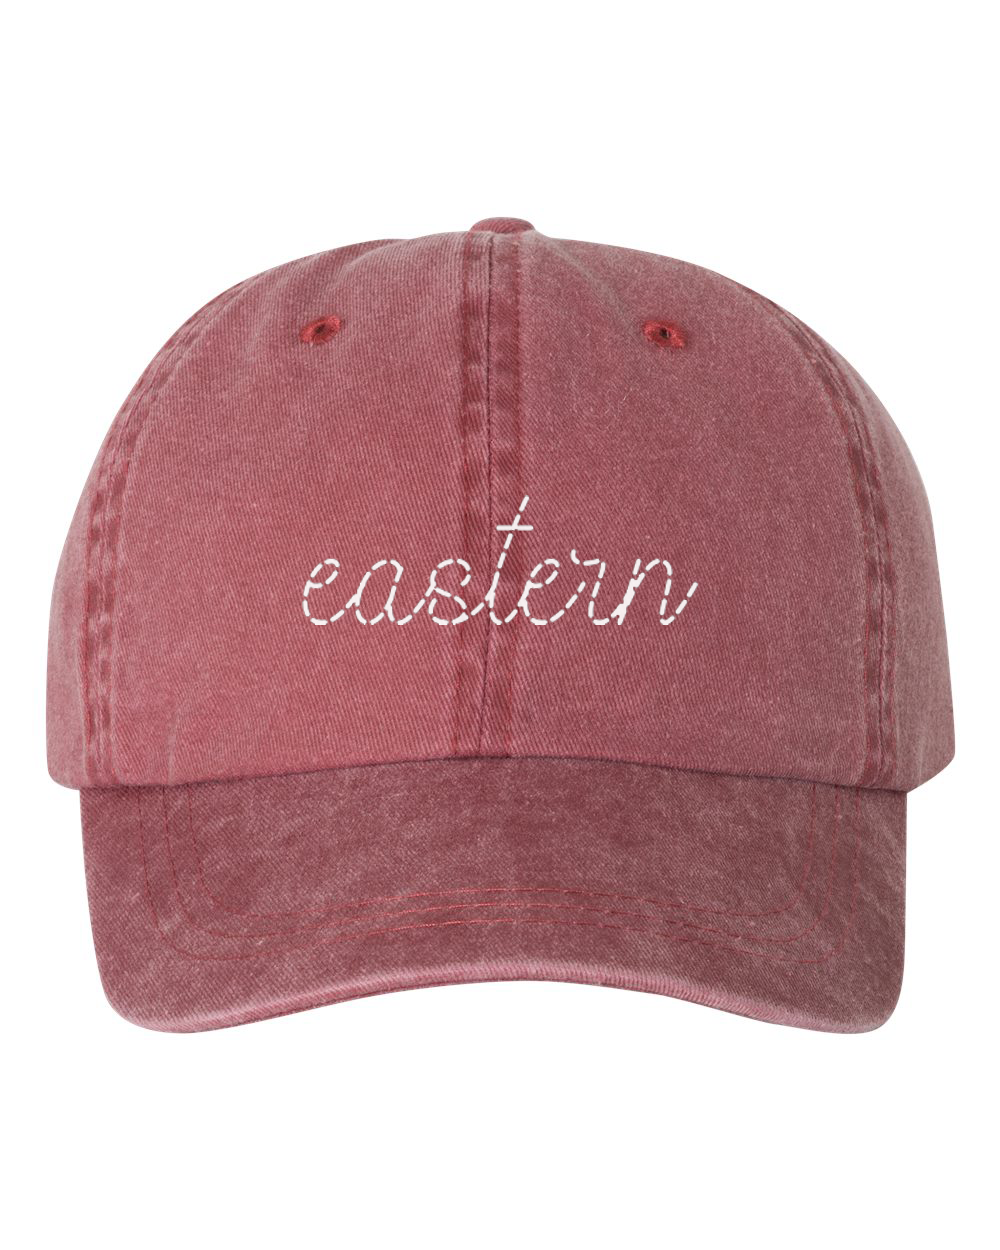 Eastern Stitched Cap